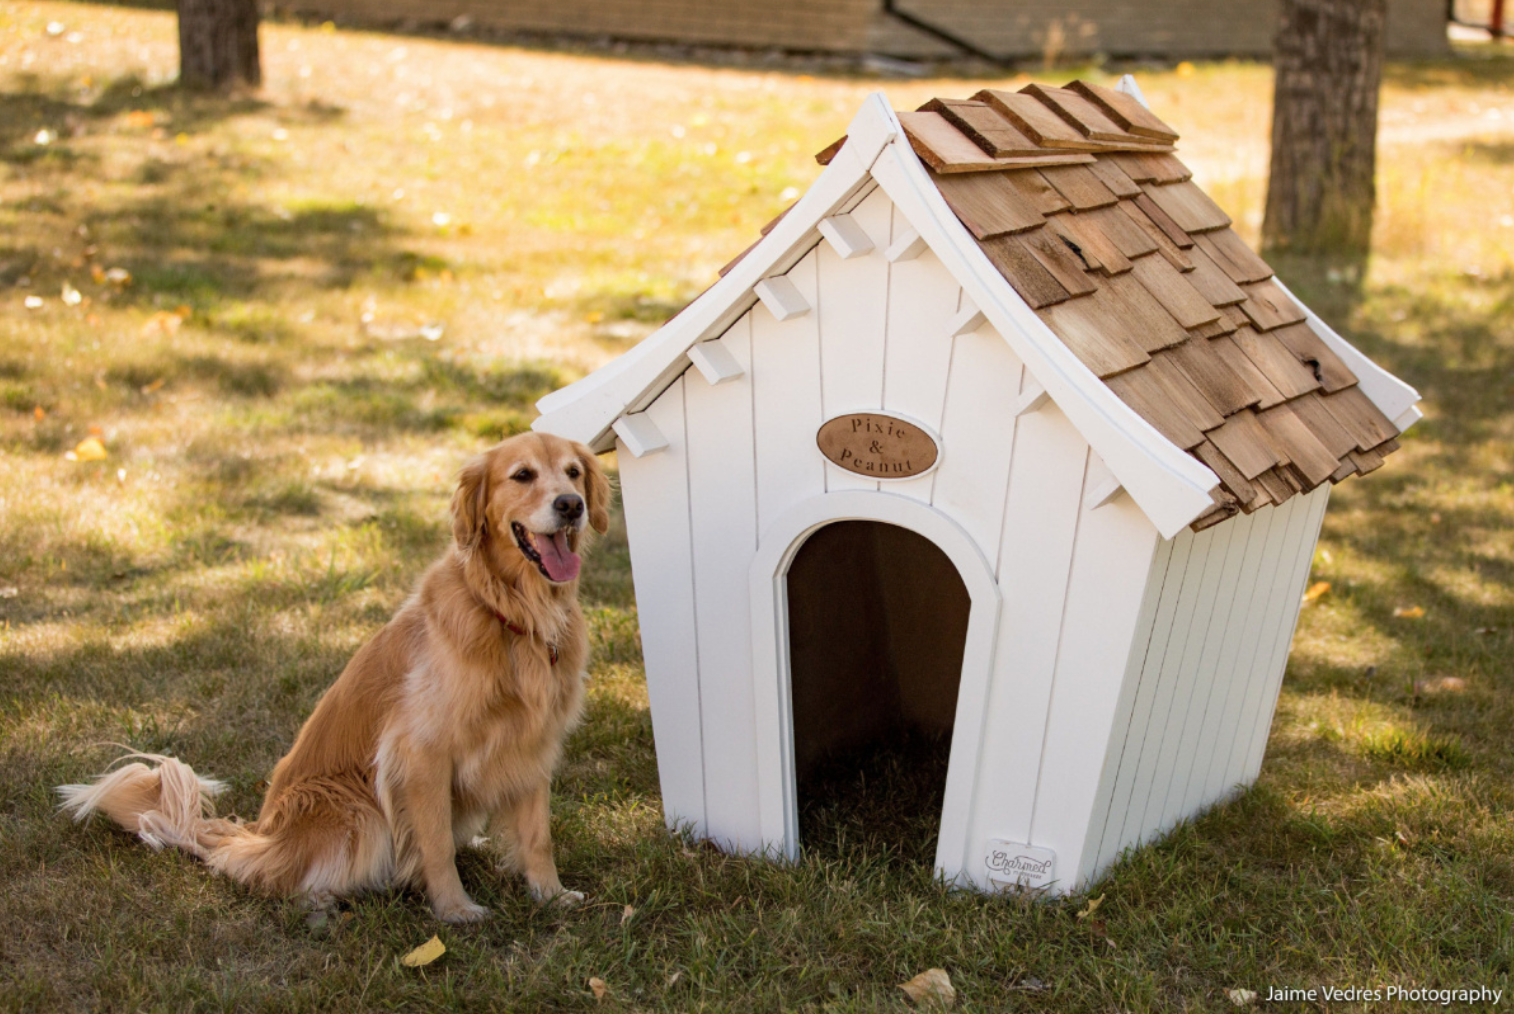 The dog house demo dog houses info. Собака с конурой. Будка для собаки. Домик для собаки. Домики для домашних собак.